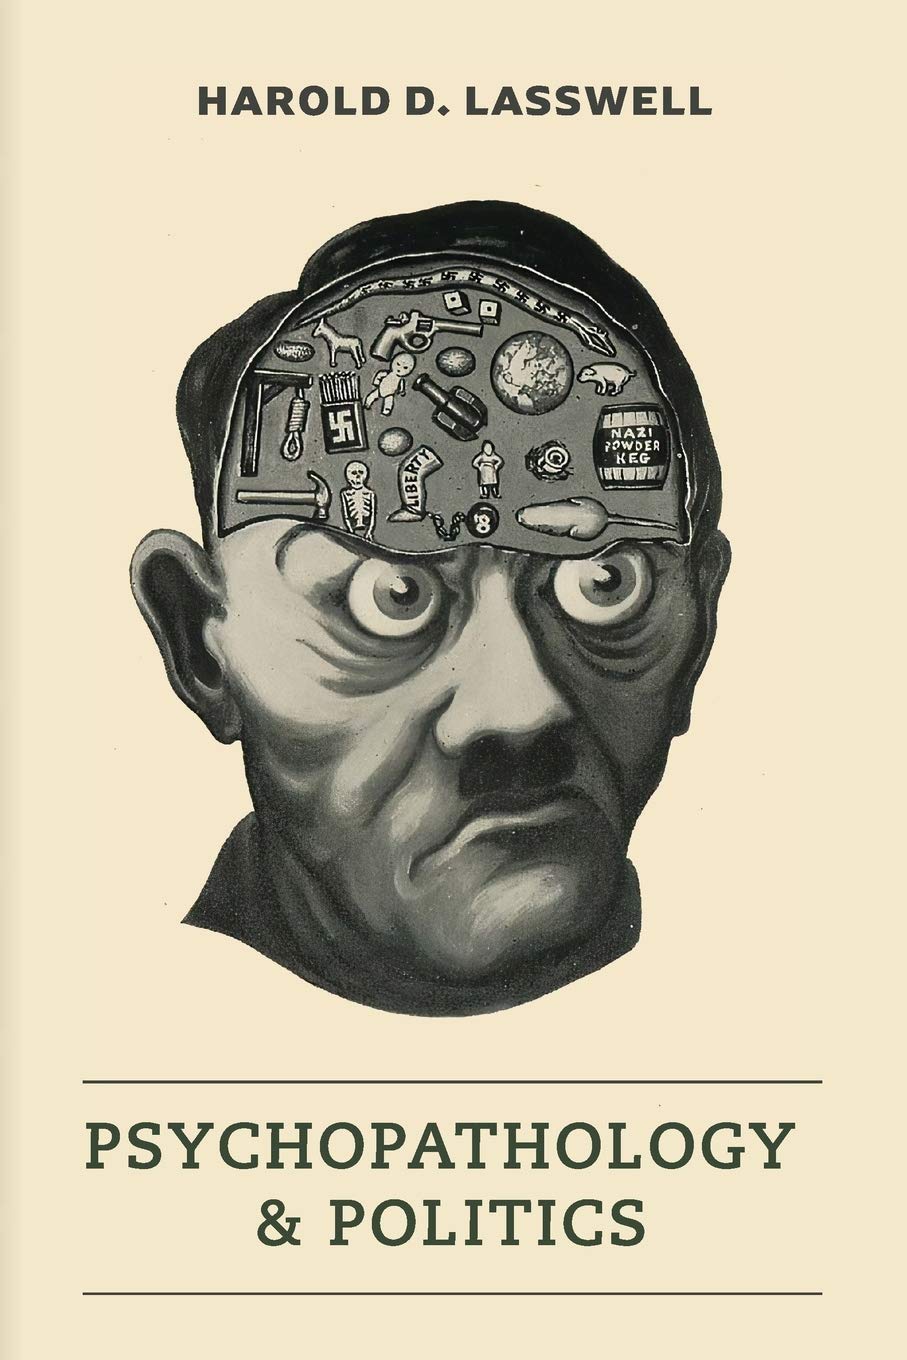 Psychopathology & Politics, by Harold D. Lasswell